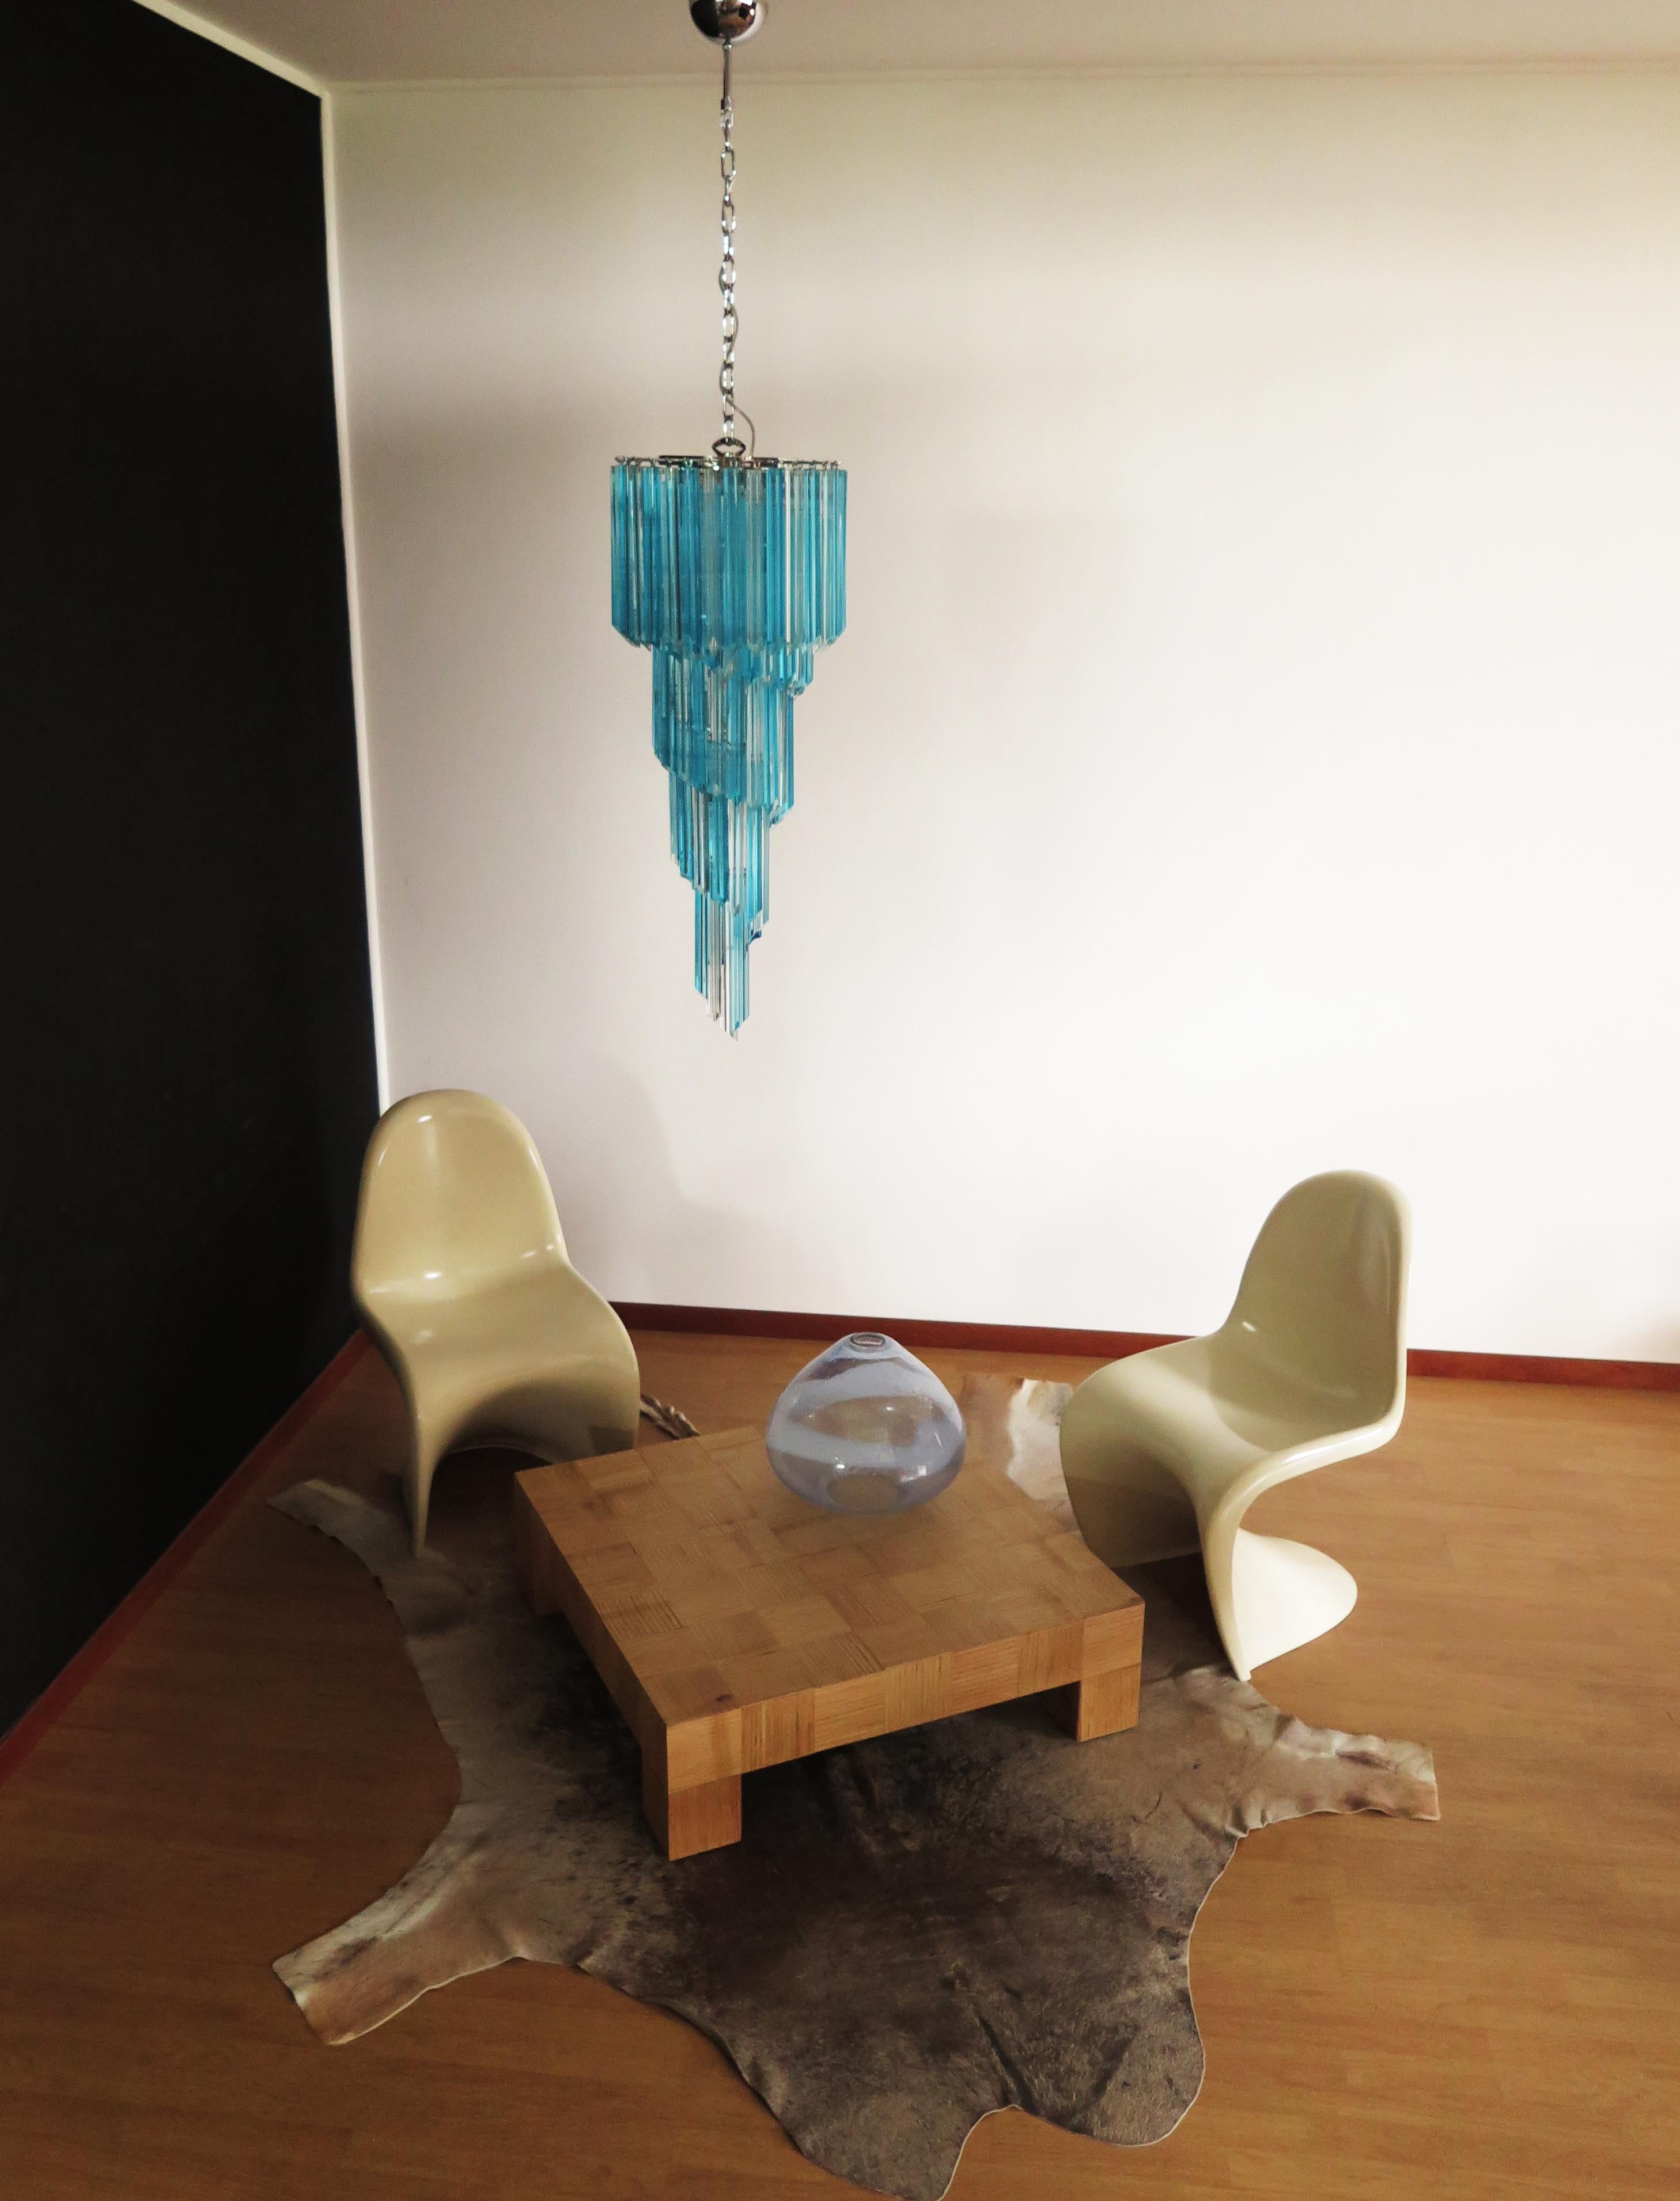 Galvanized Murano chandelier 86 transparent and blue quadriedri prism For Sale